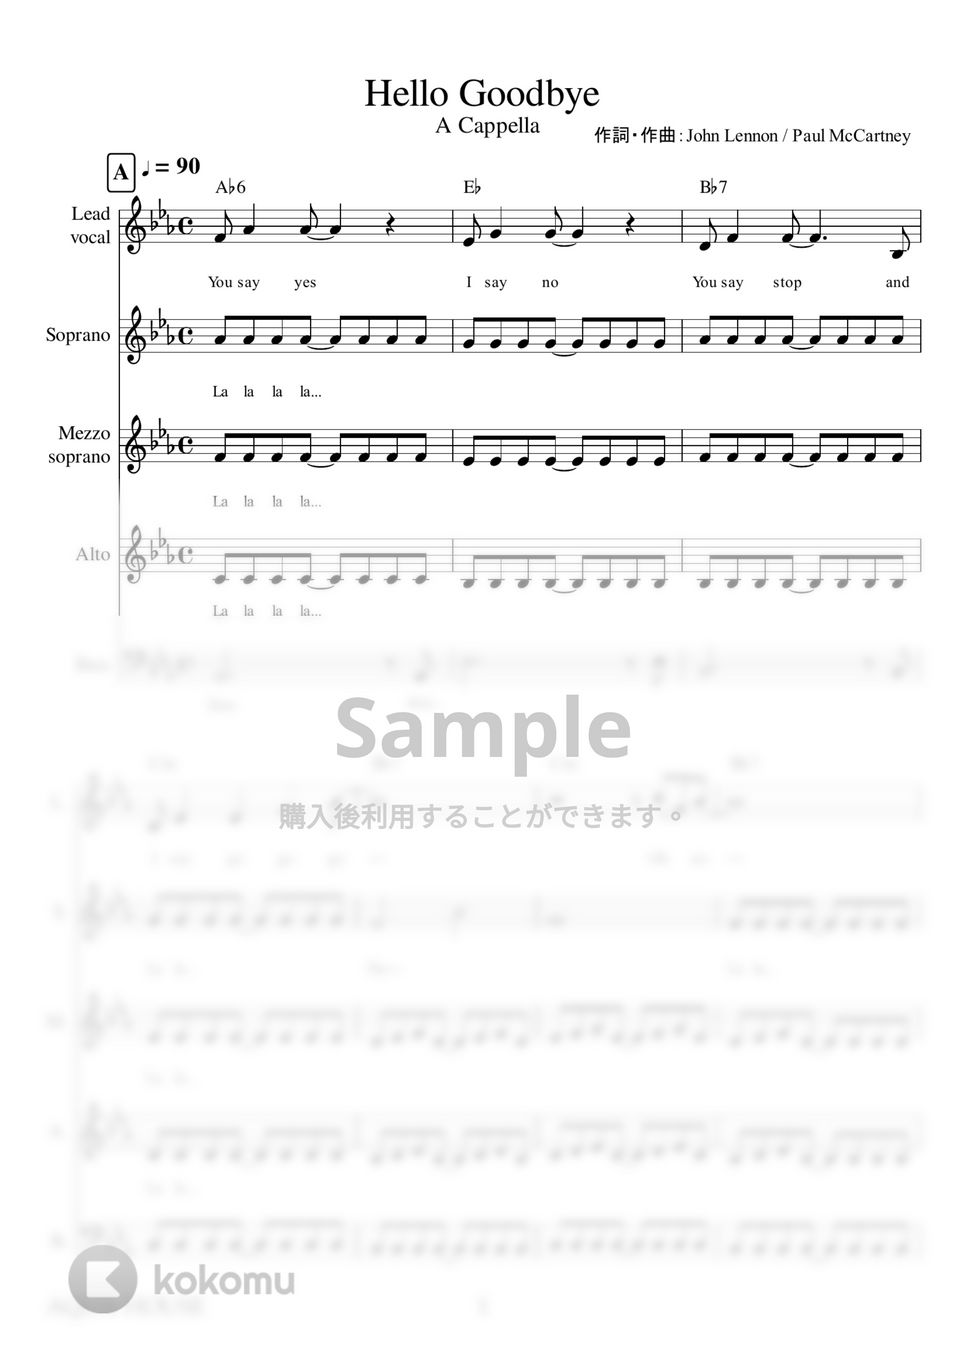 The Beatles - Hello Goodbye (アカペラ楽譜♪5声ボイパなし) by 飯田 亜紗子